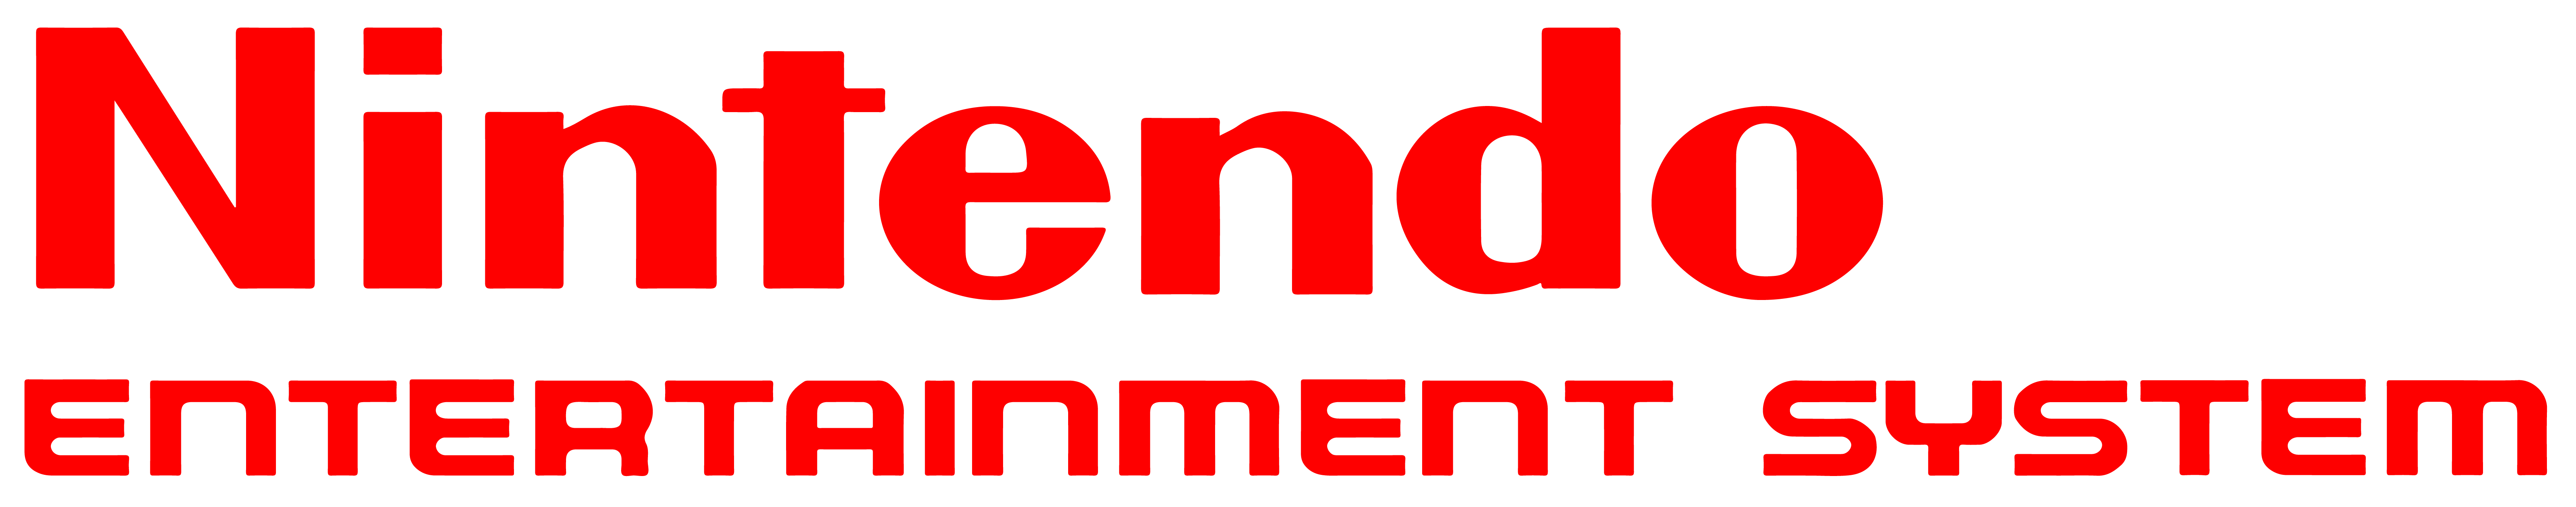 File:Nes logo.png